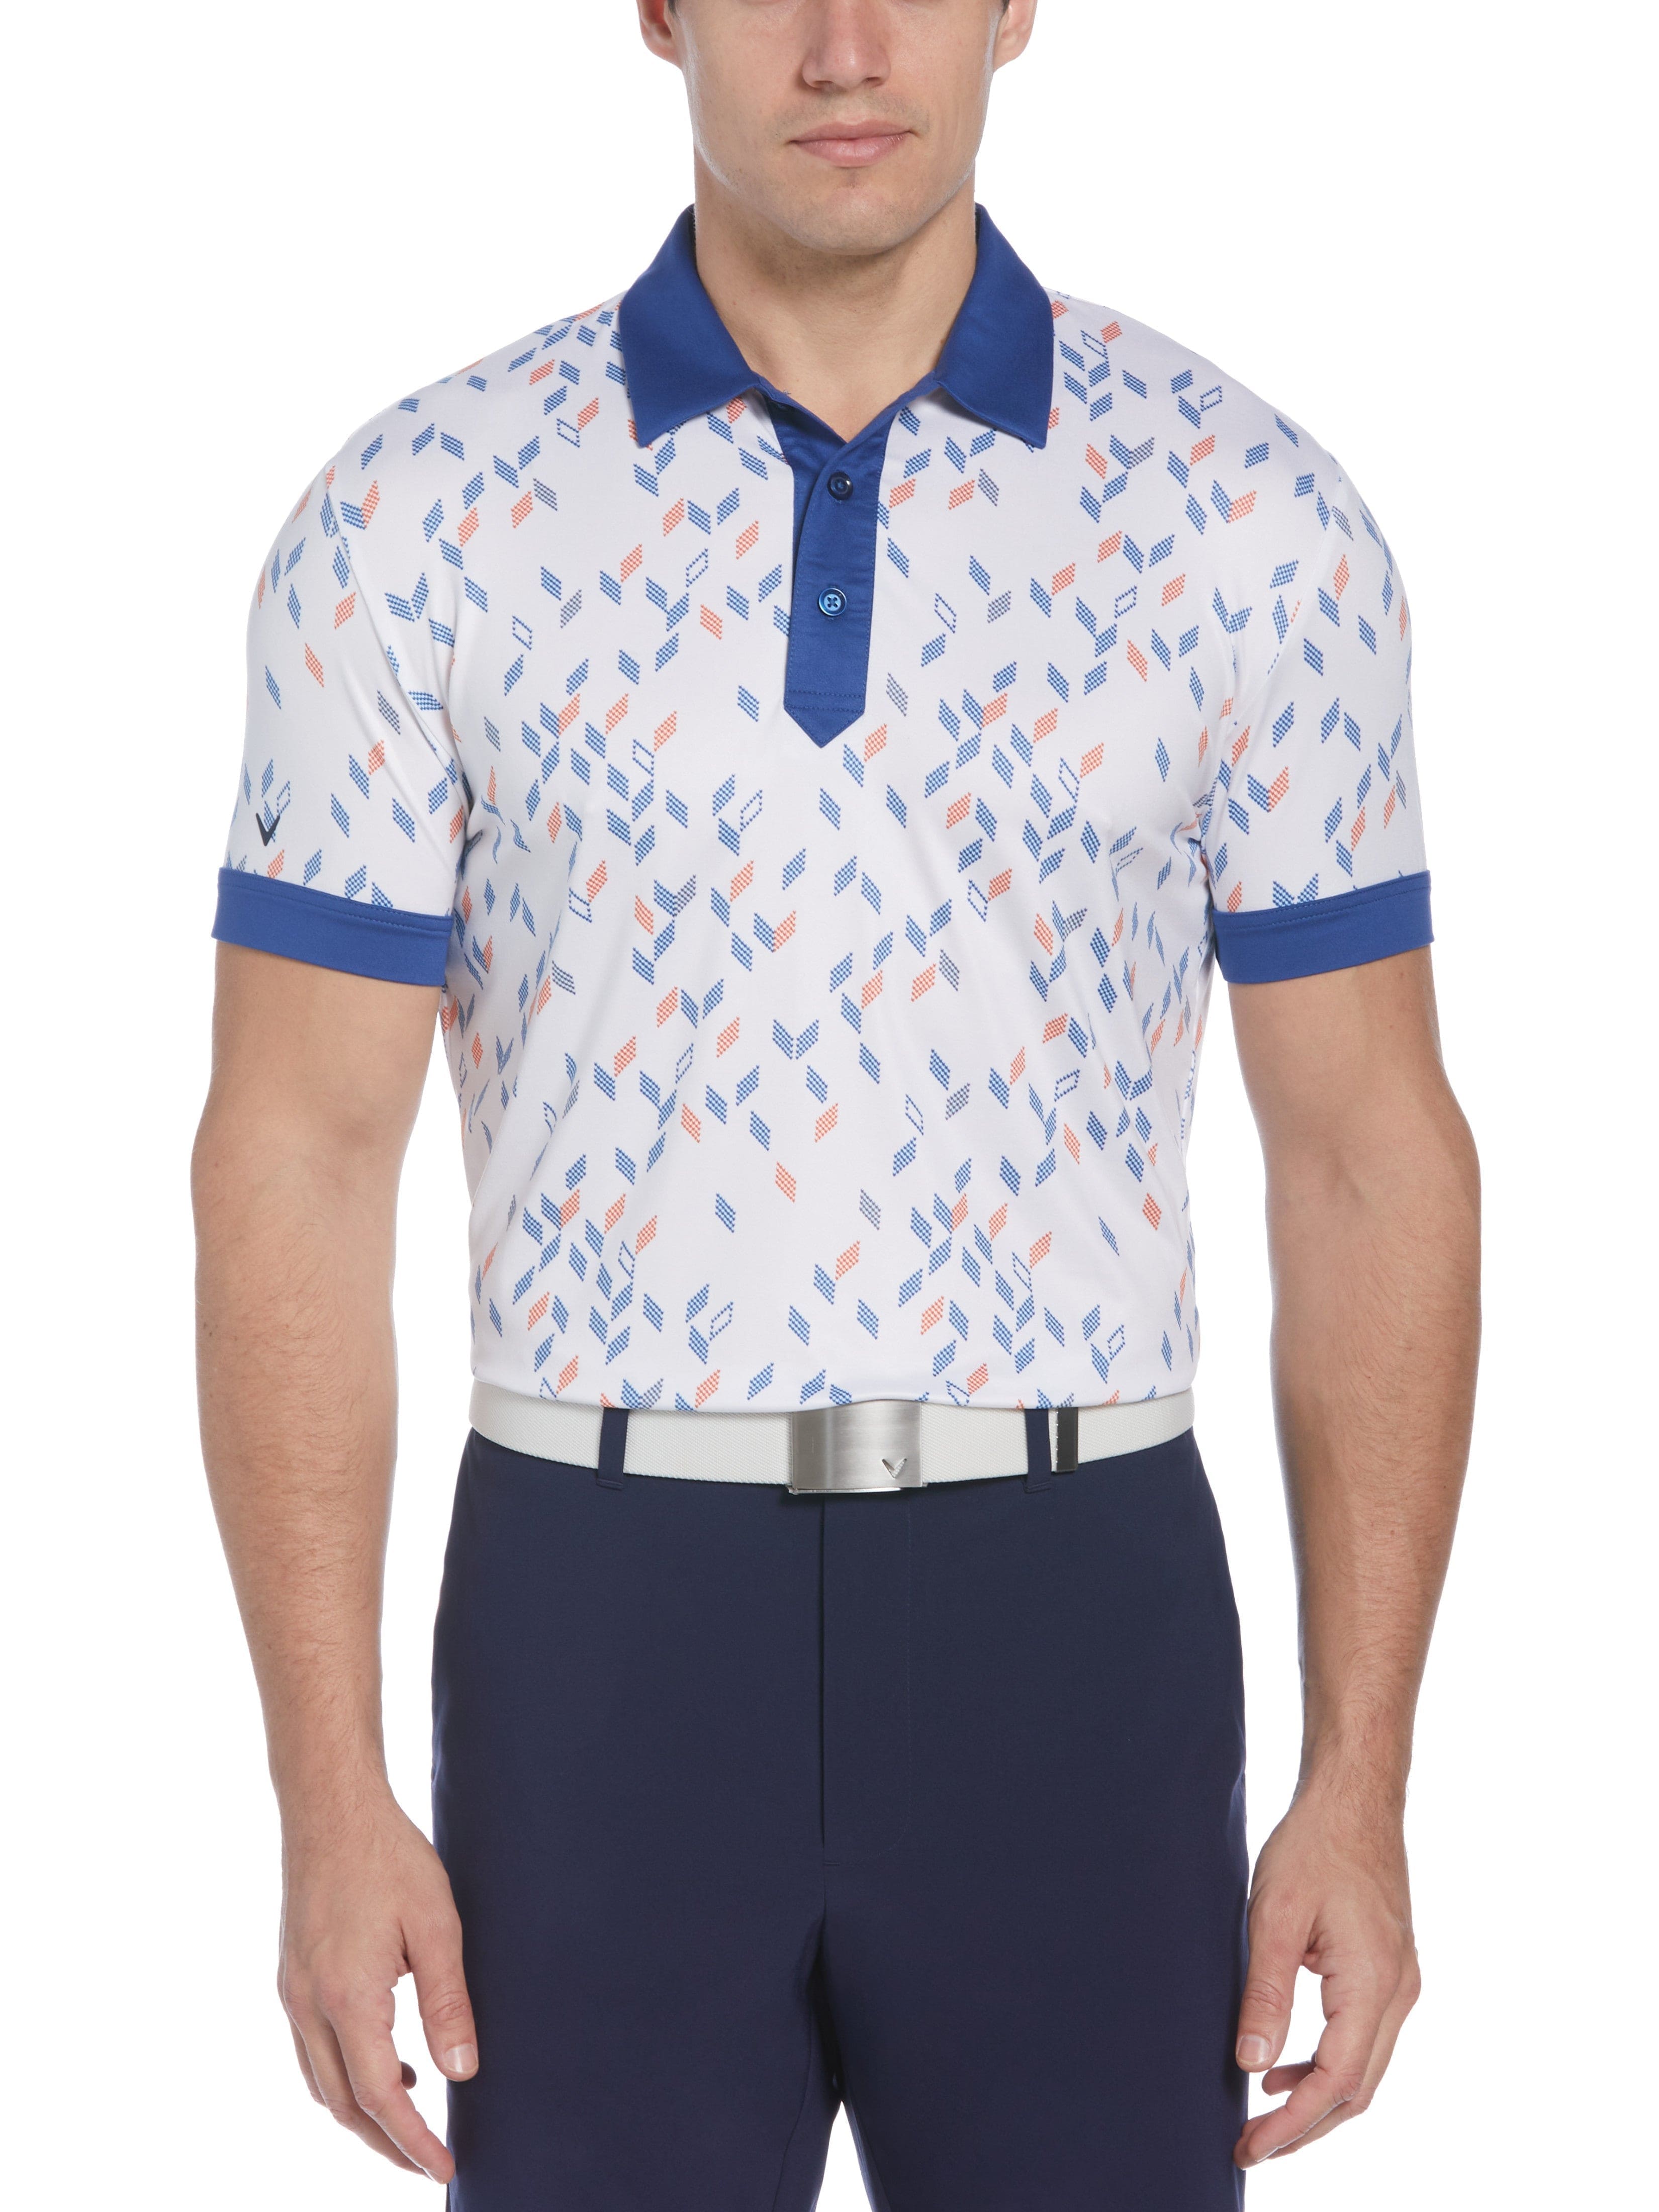 Callaway Apparel Mens All-Over Geo Chevron Print Golf Polo Shirt, Size 2XL, White, Poly Blend | Golf Apparel Shop